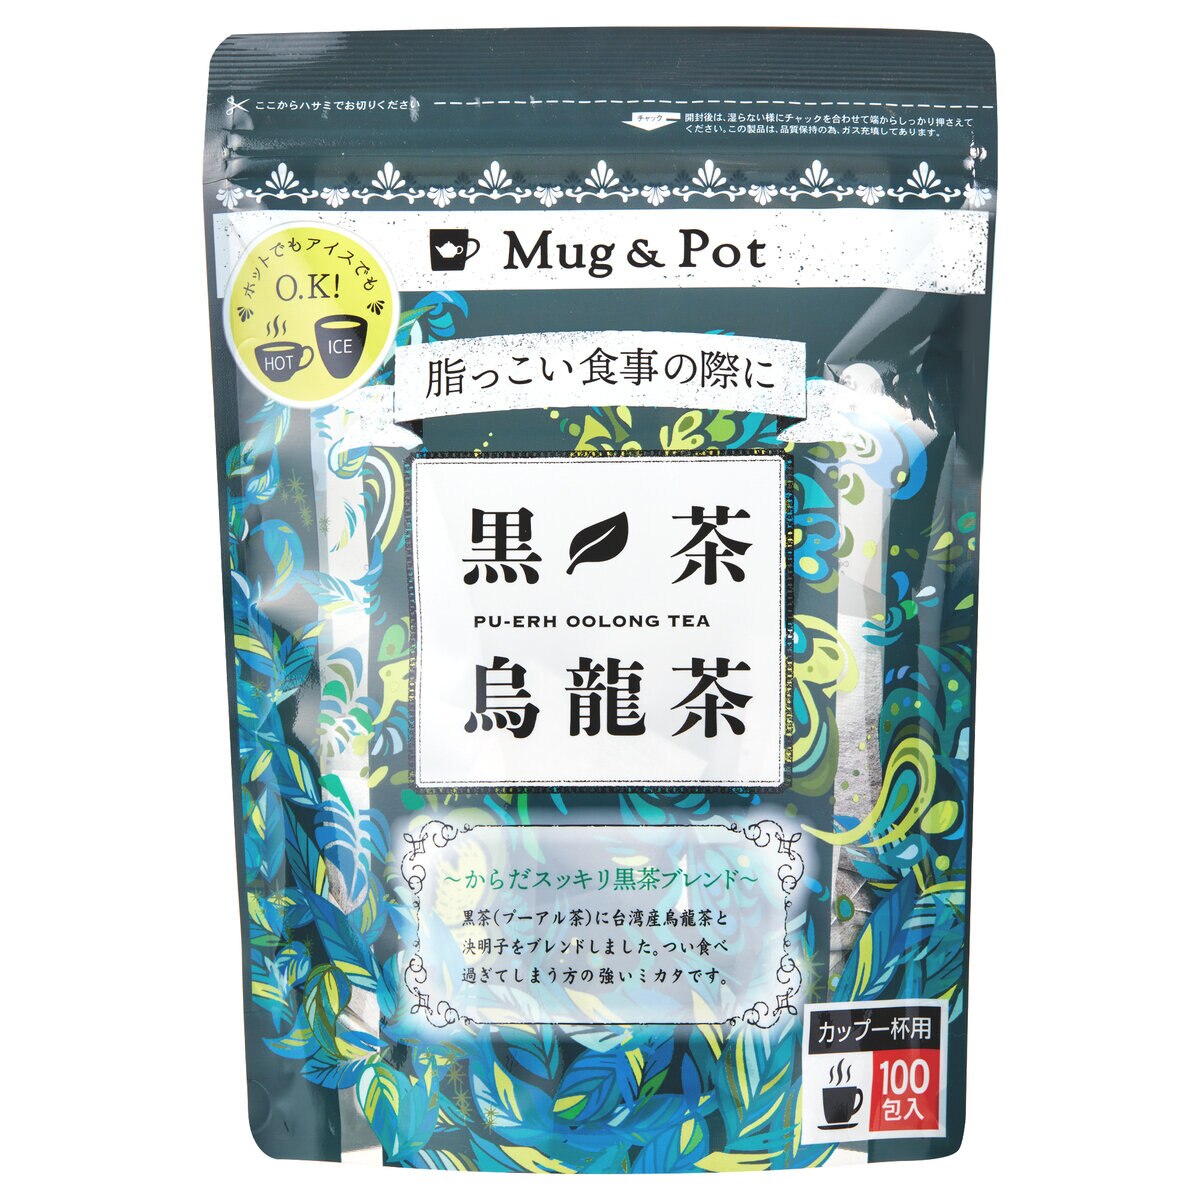 Mug & Pot 黒茶烏龍茶 1.5g X 100包